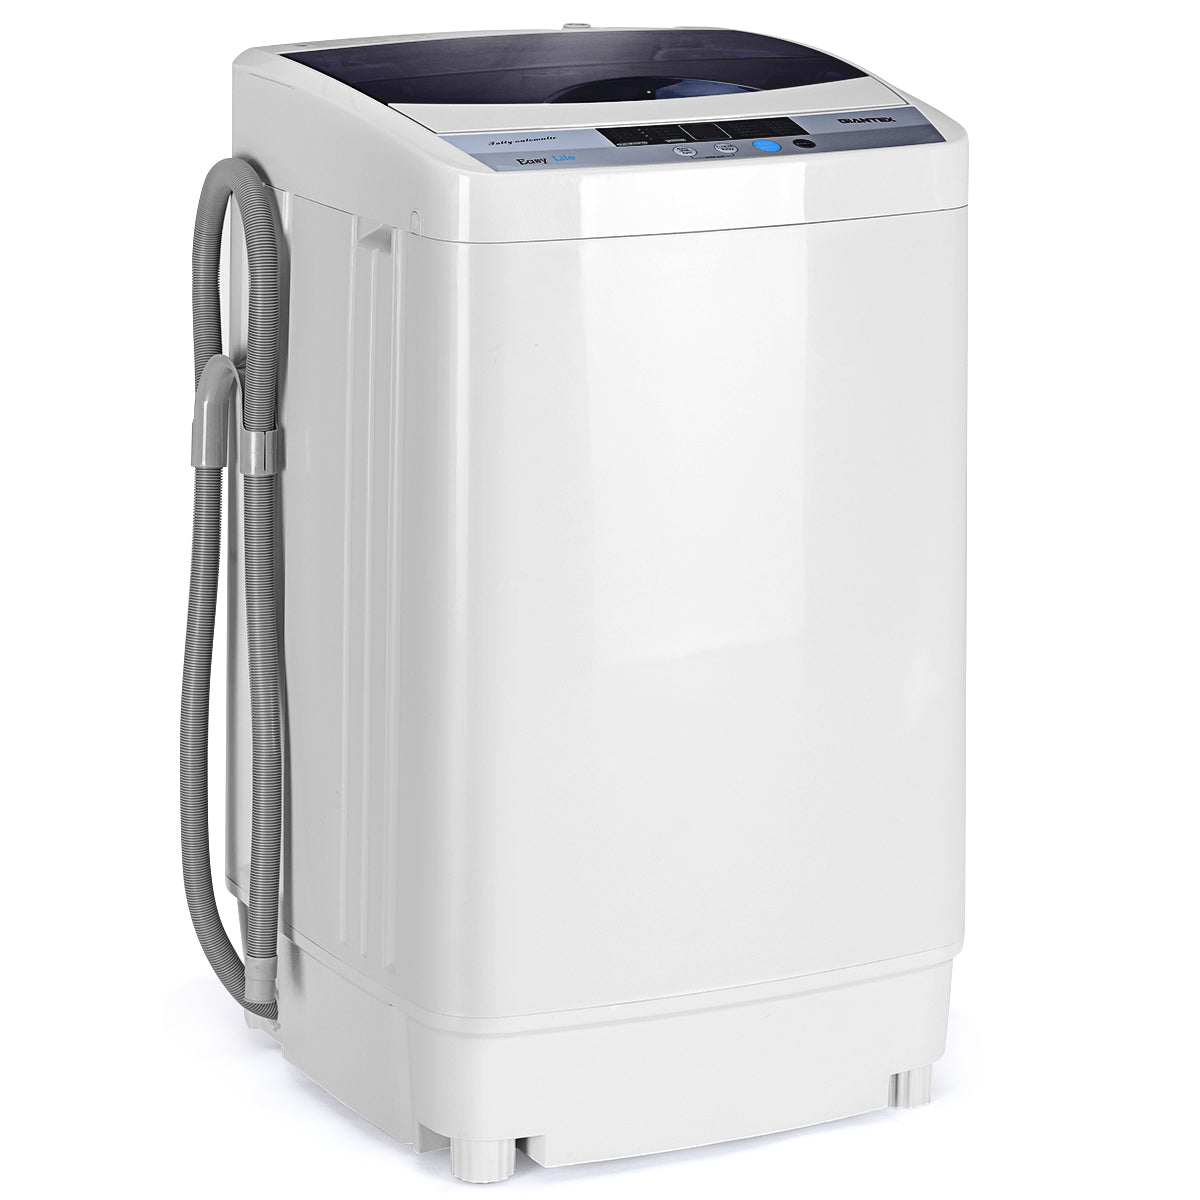 Giantex Portable Washing Machines for sale